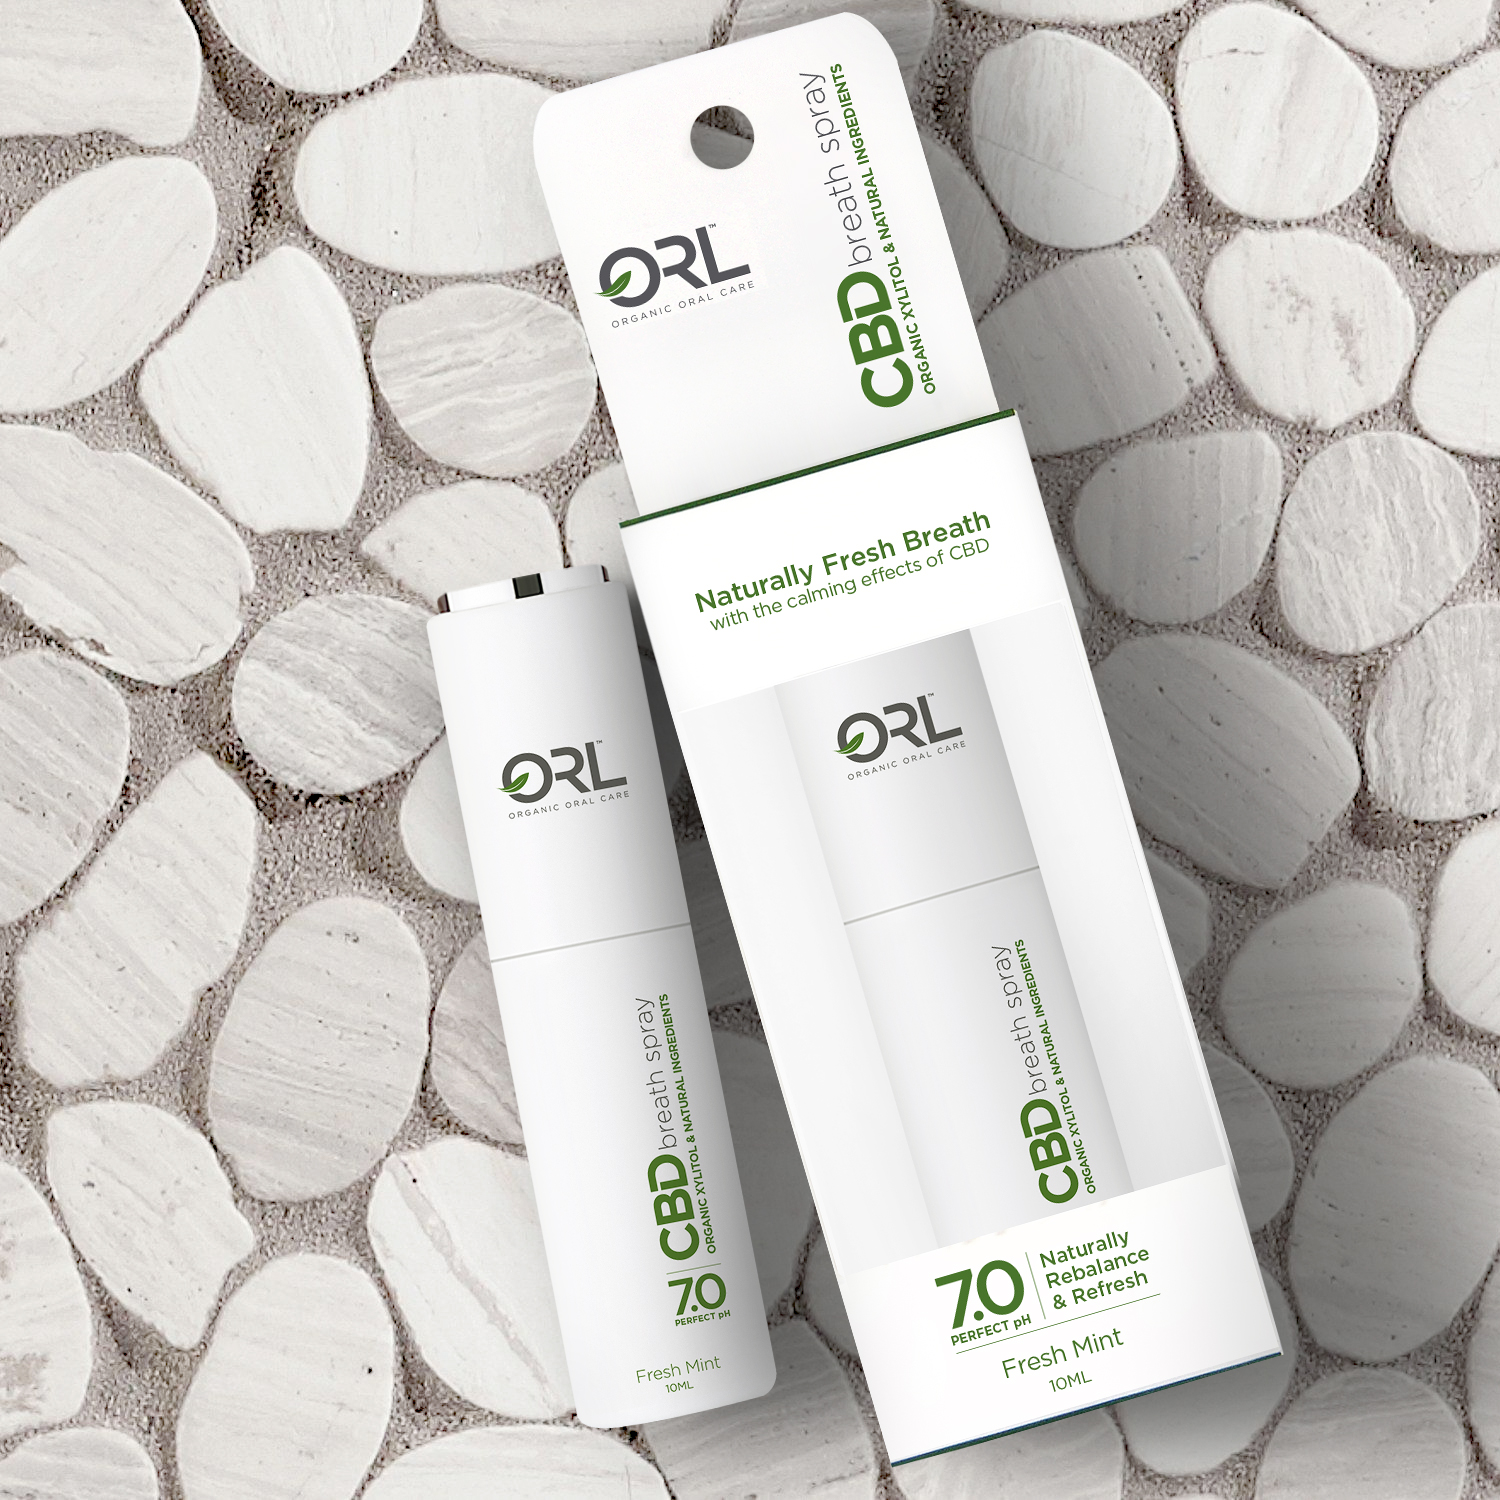 Introducing the new ORL CBD Breath Sprays!